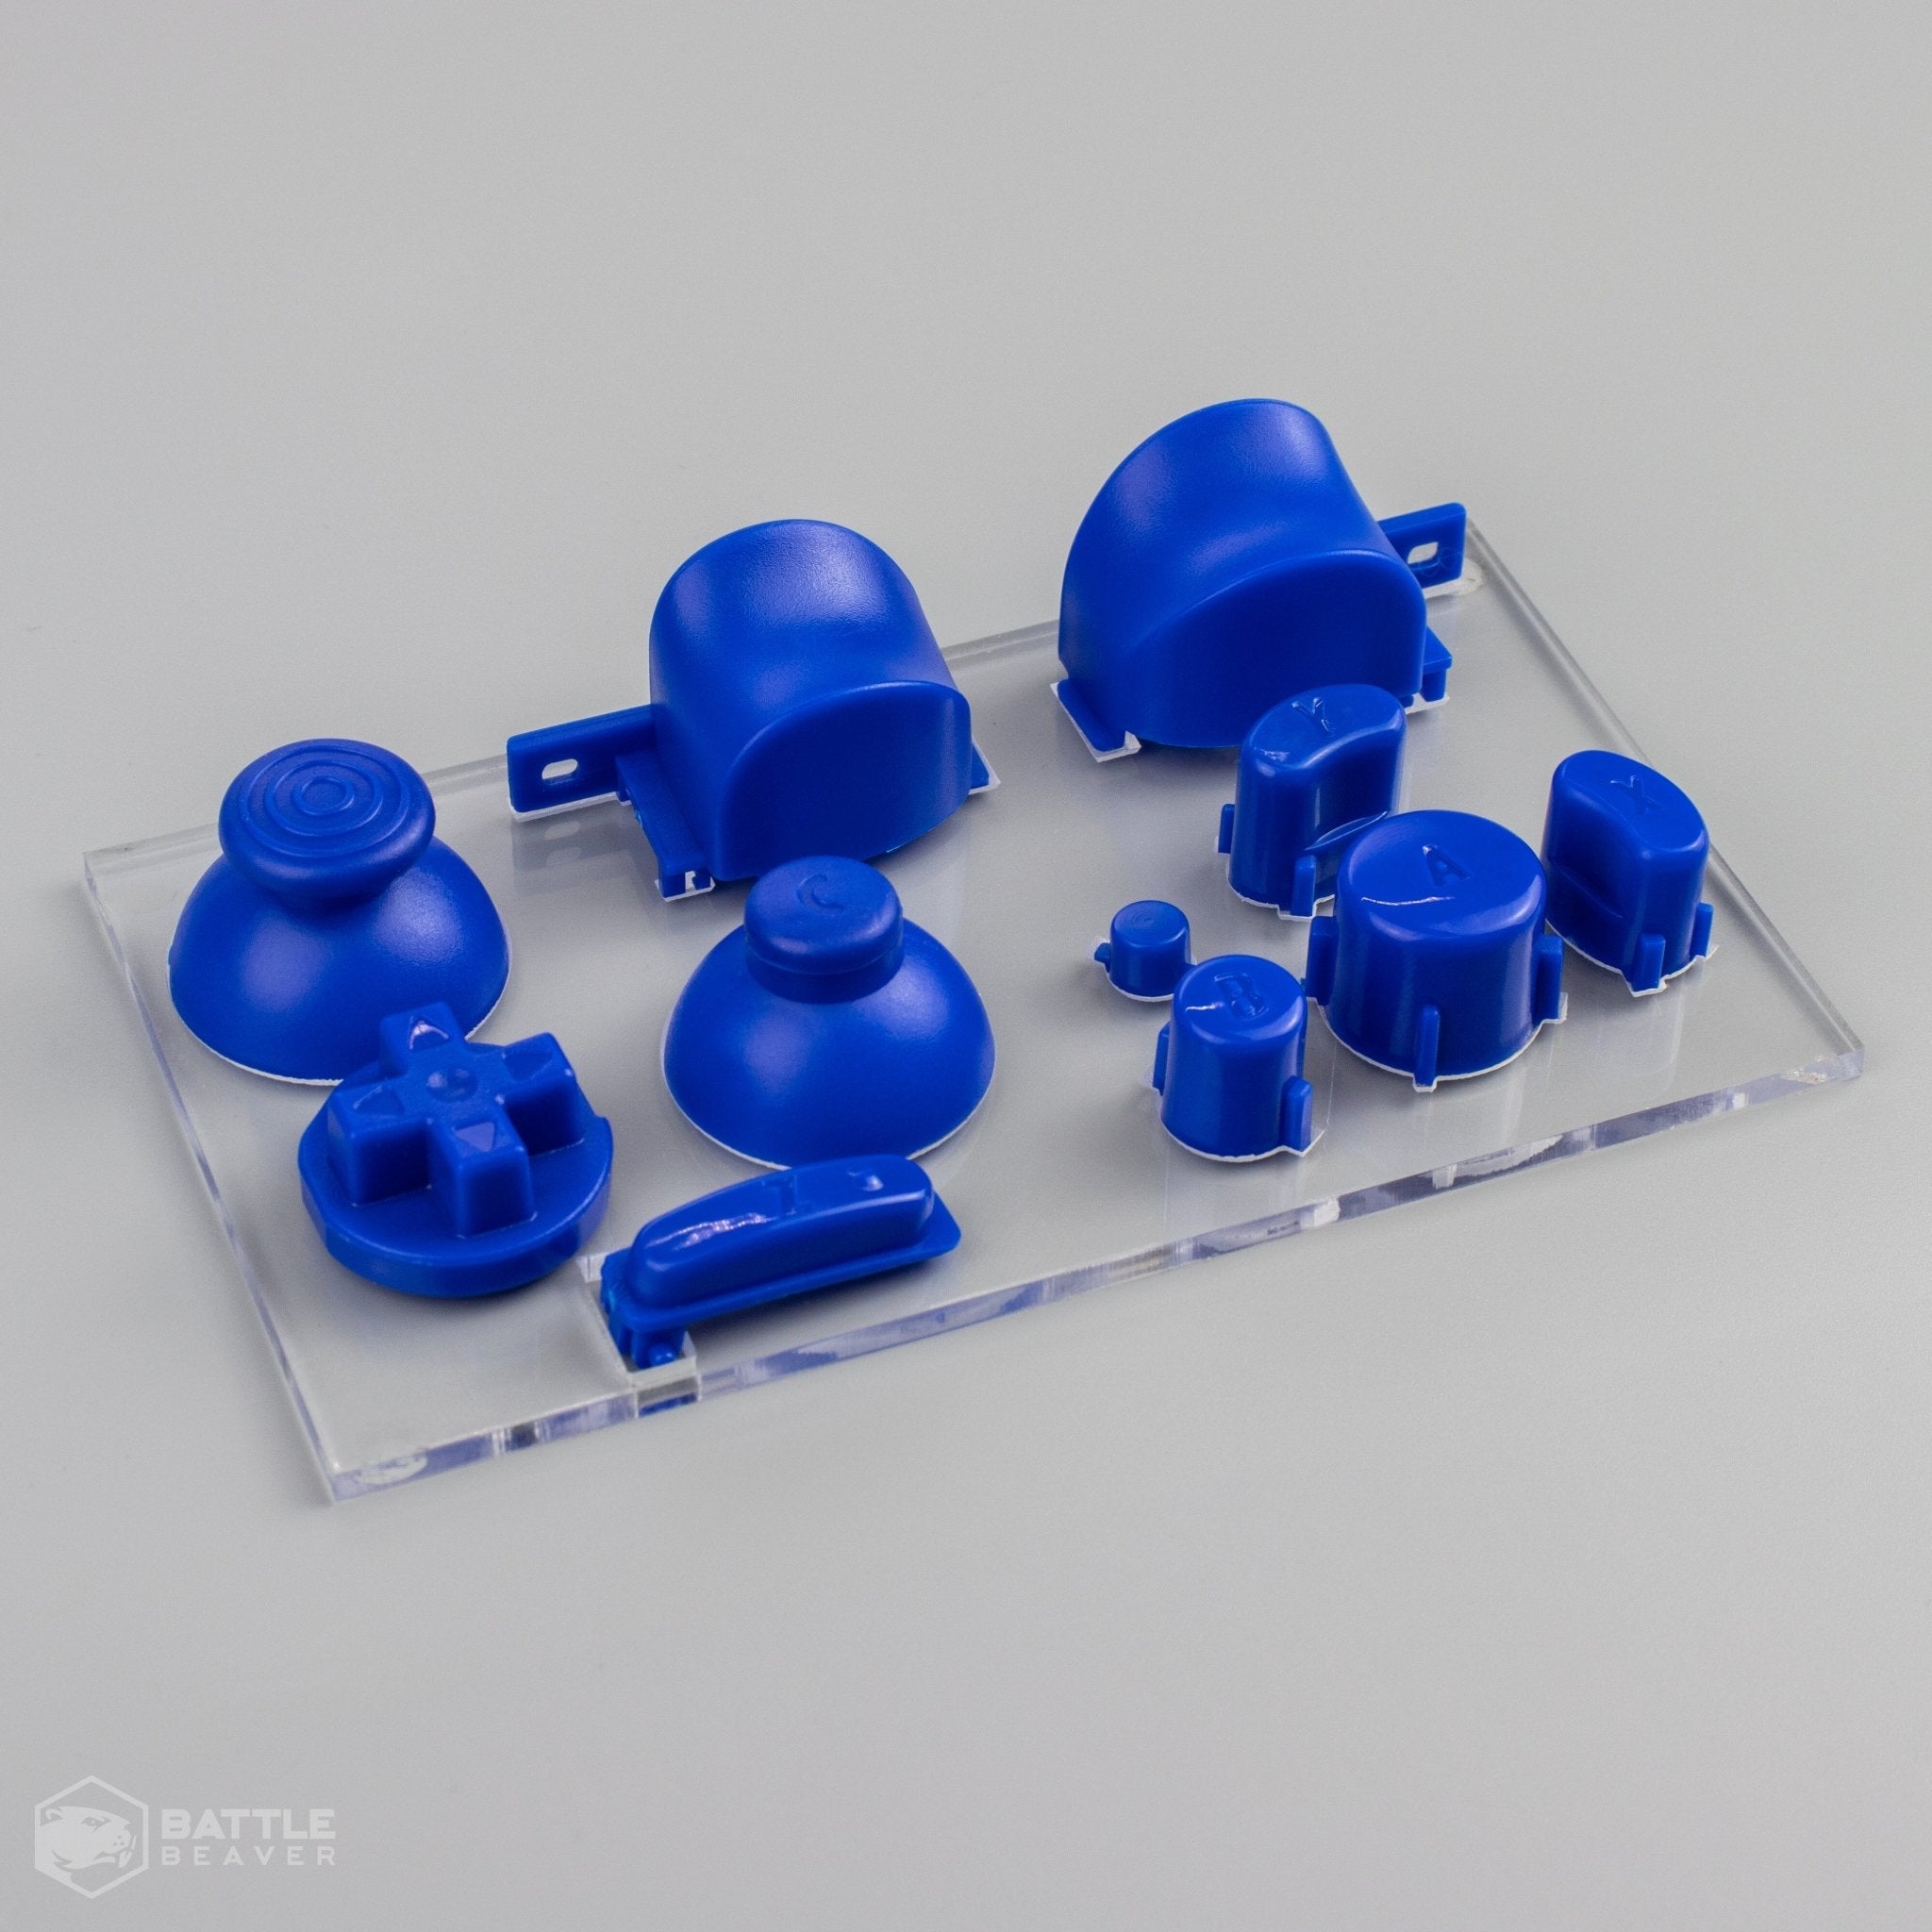 3rd Party Gamecube Parts Kit - Battle Beaver Customs - Blue